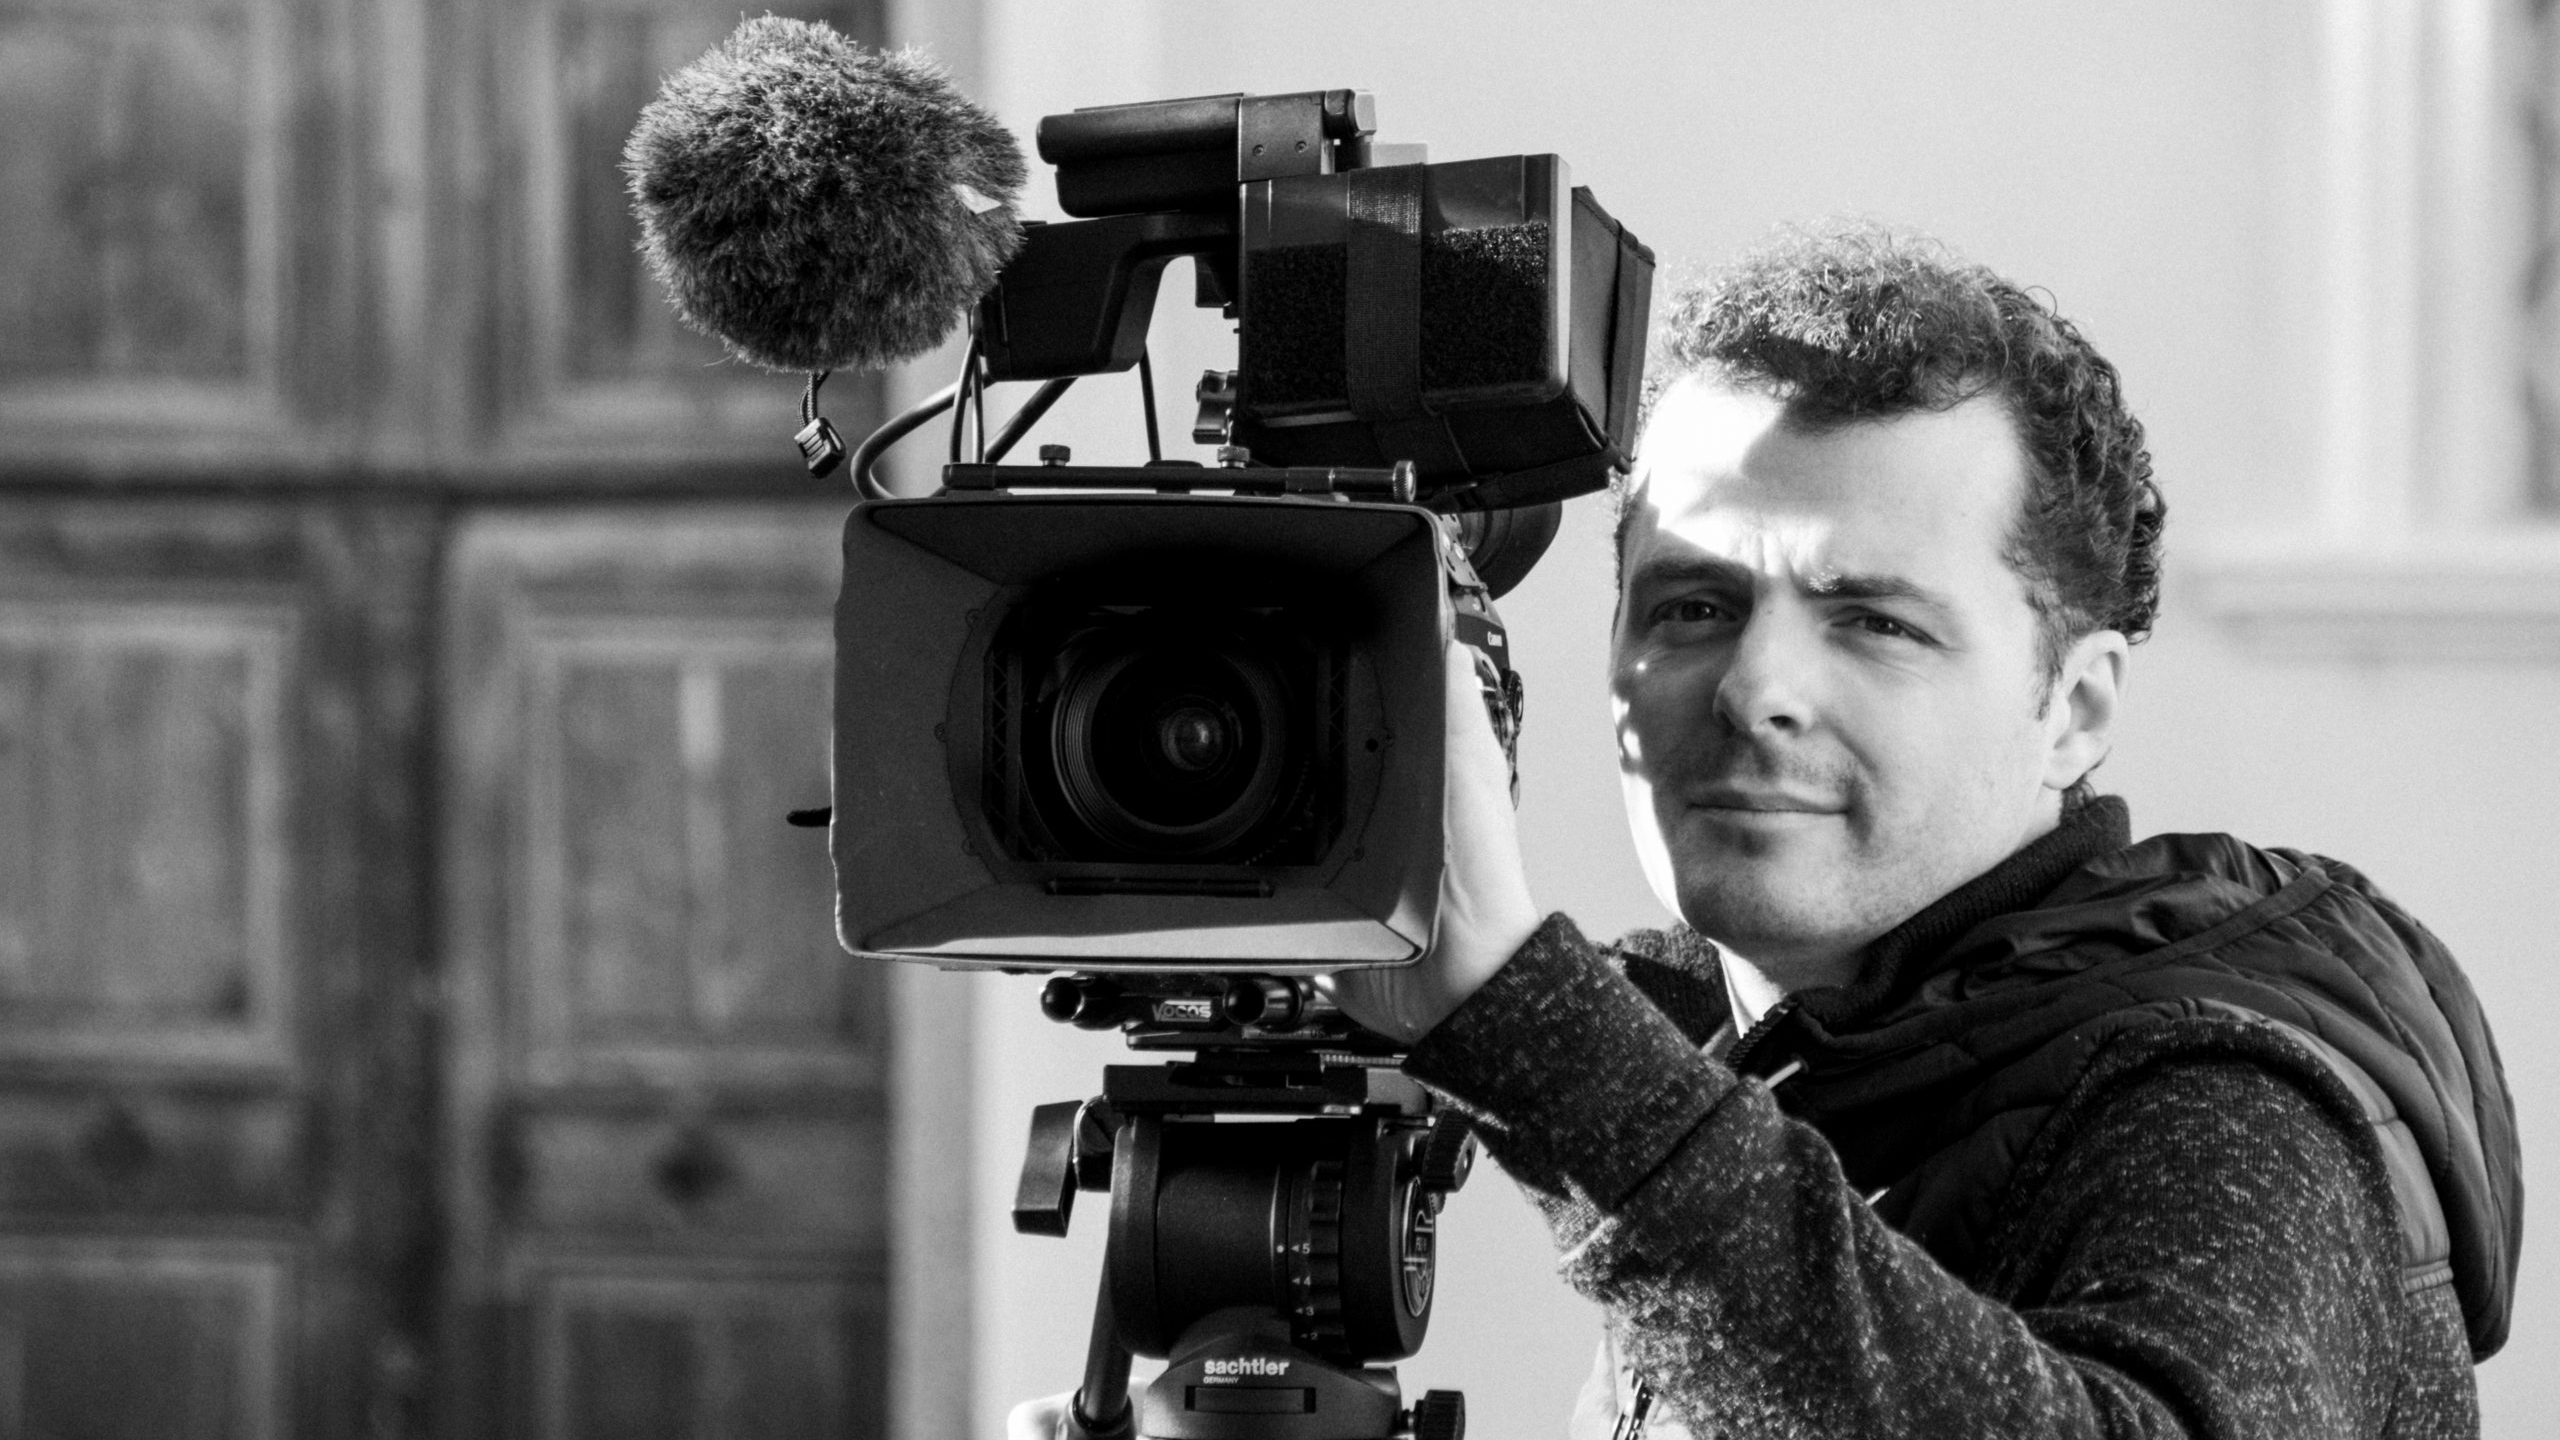 Emanuel Altenburger, Director of Photography